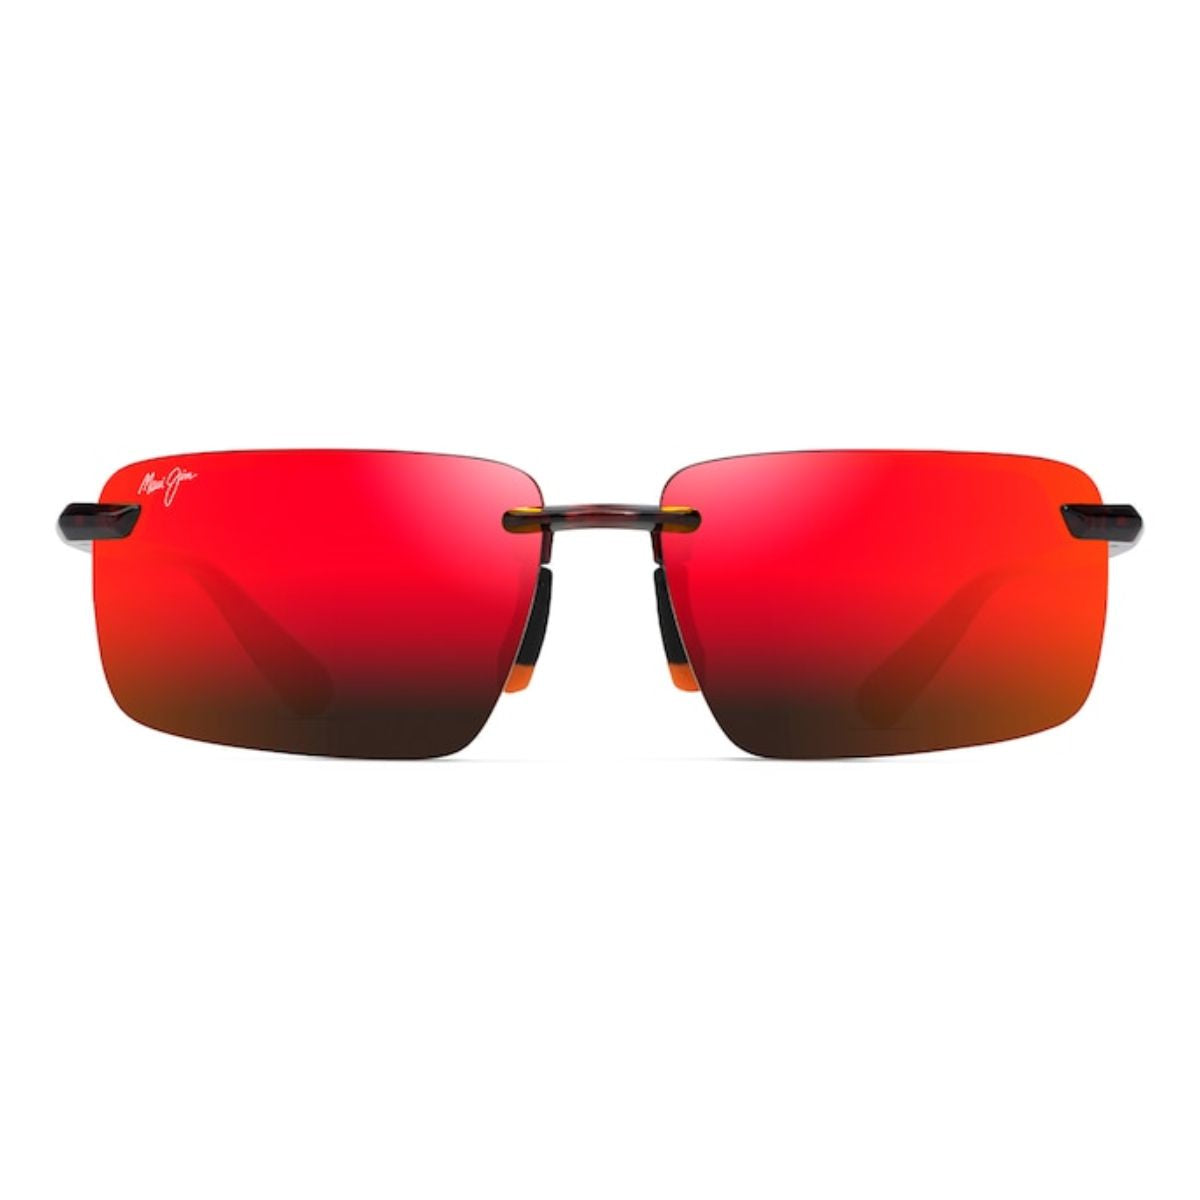 "Laullima Maui Jim Polarized Sunglasses For Mens At Optorium"